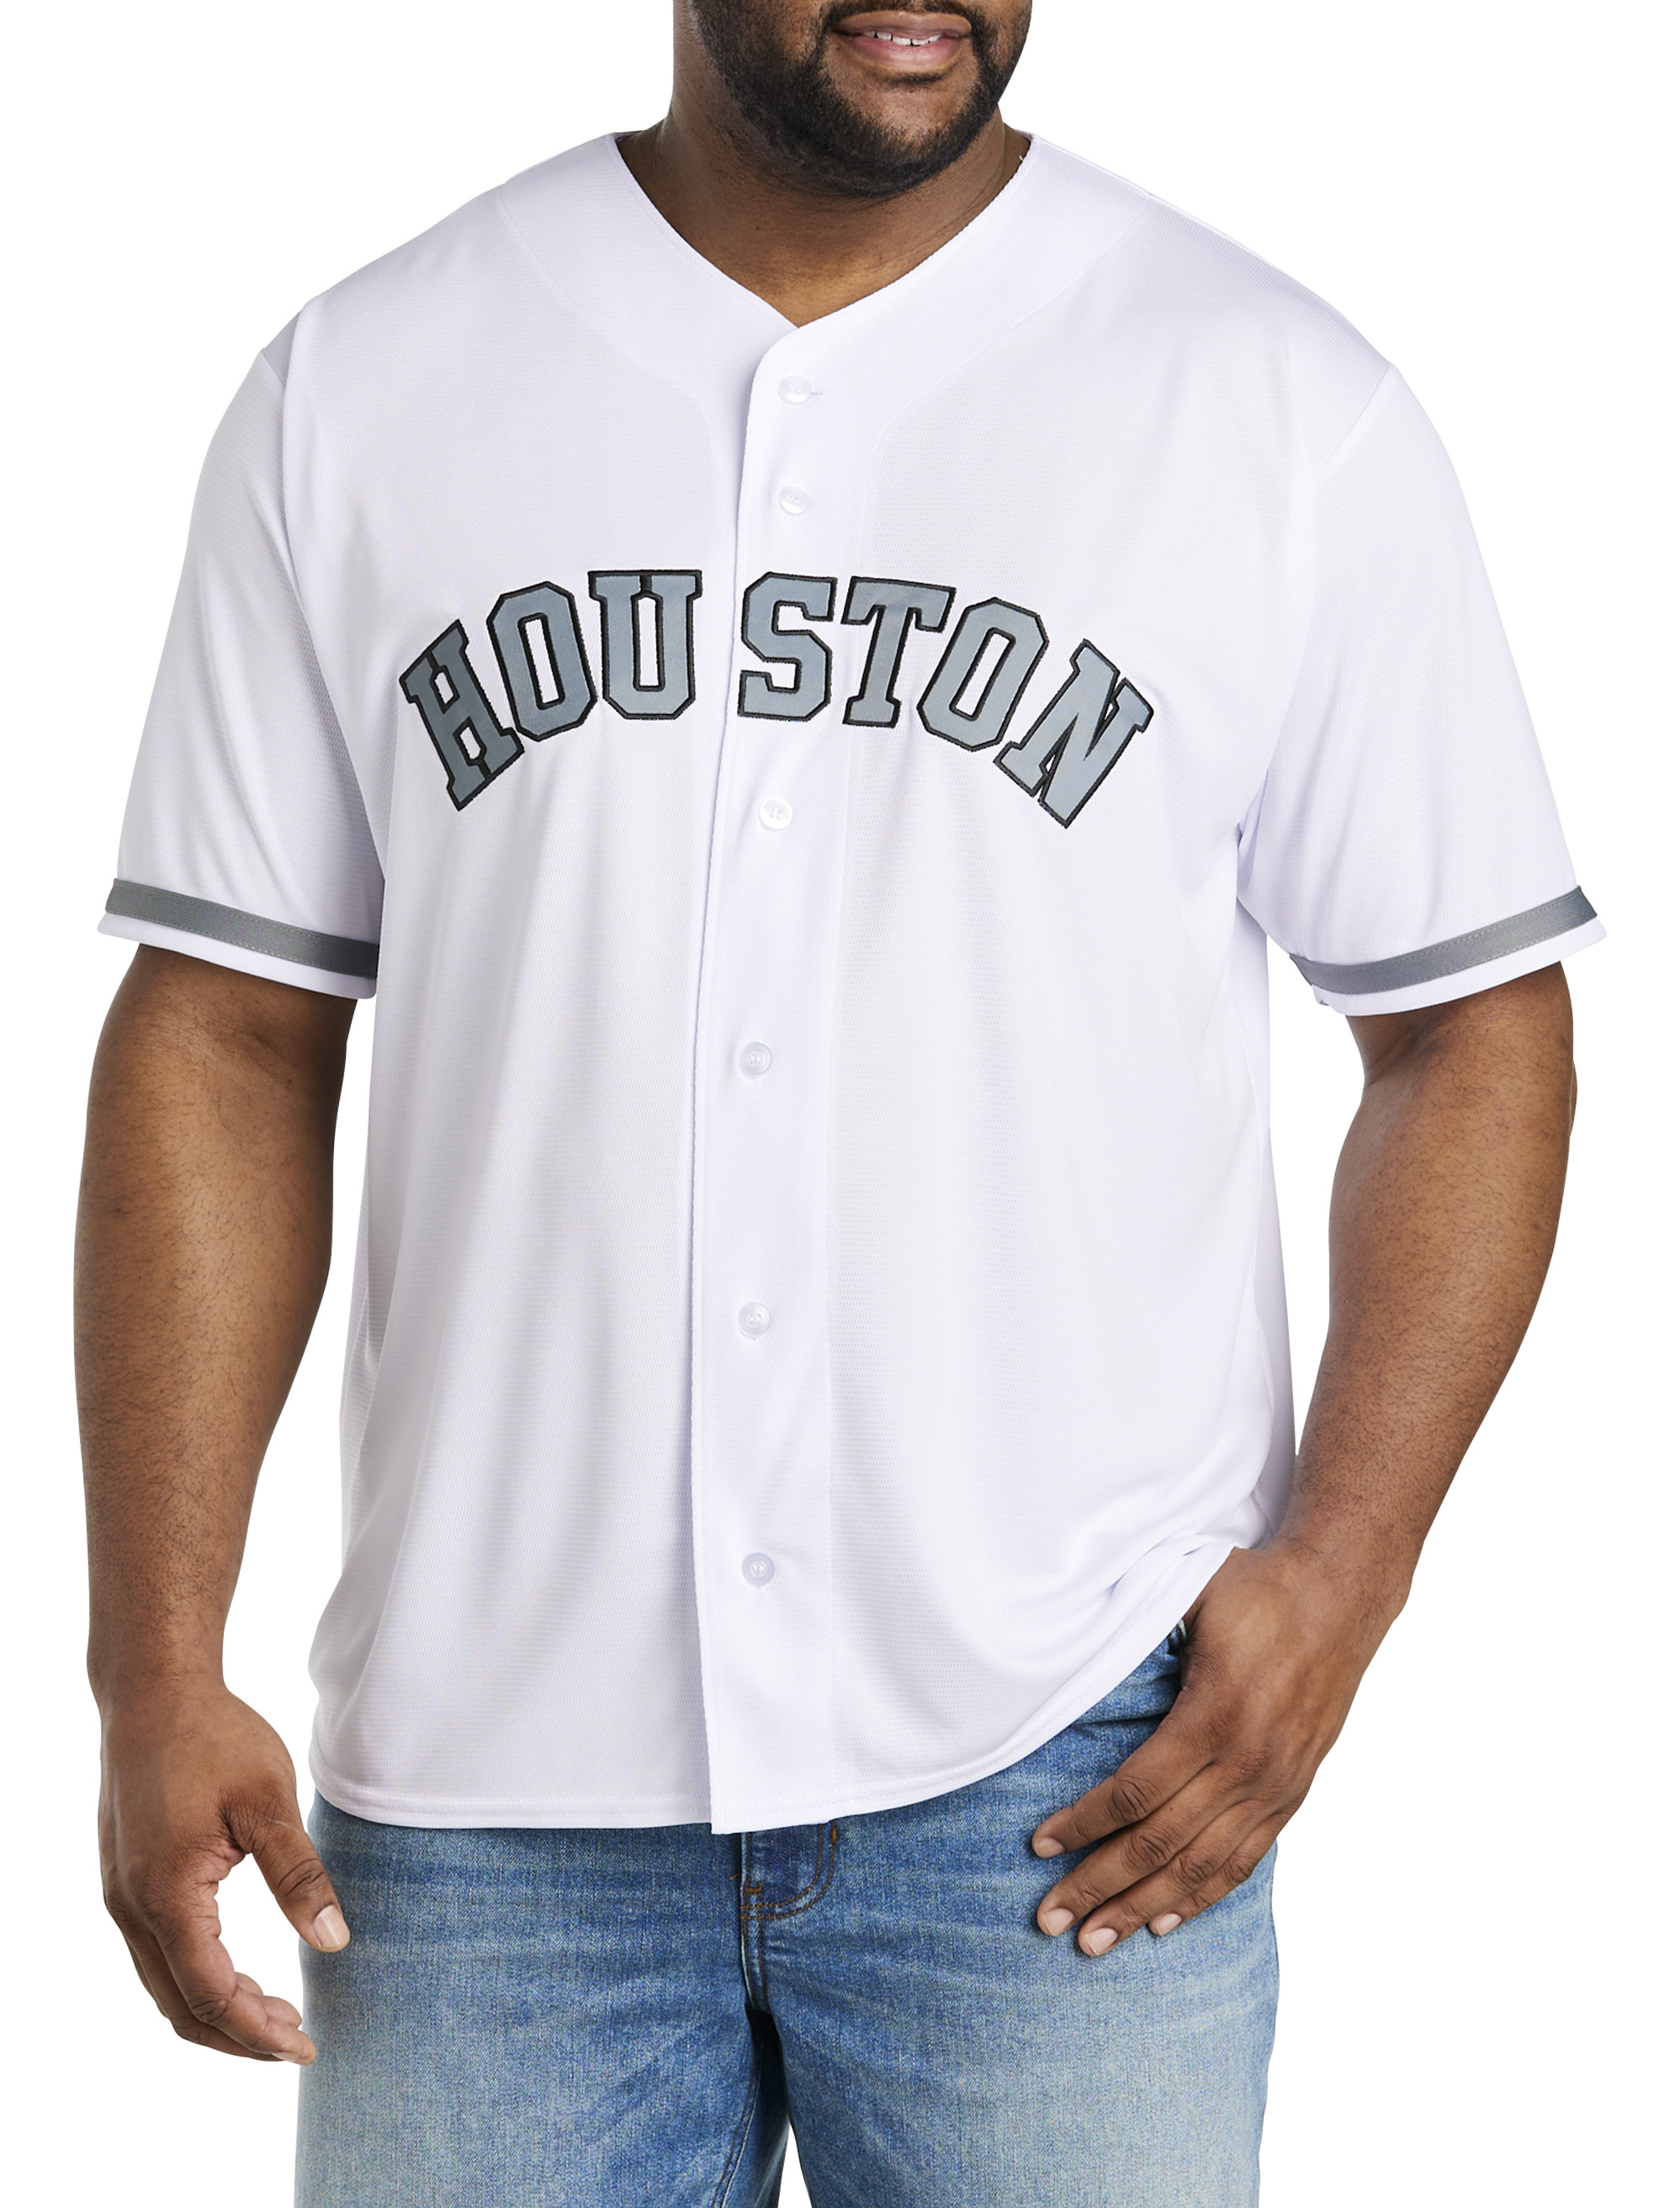 MLB Men's Big & Tall Player Jersey - White - Short Sleeve T-shirts